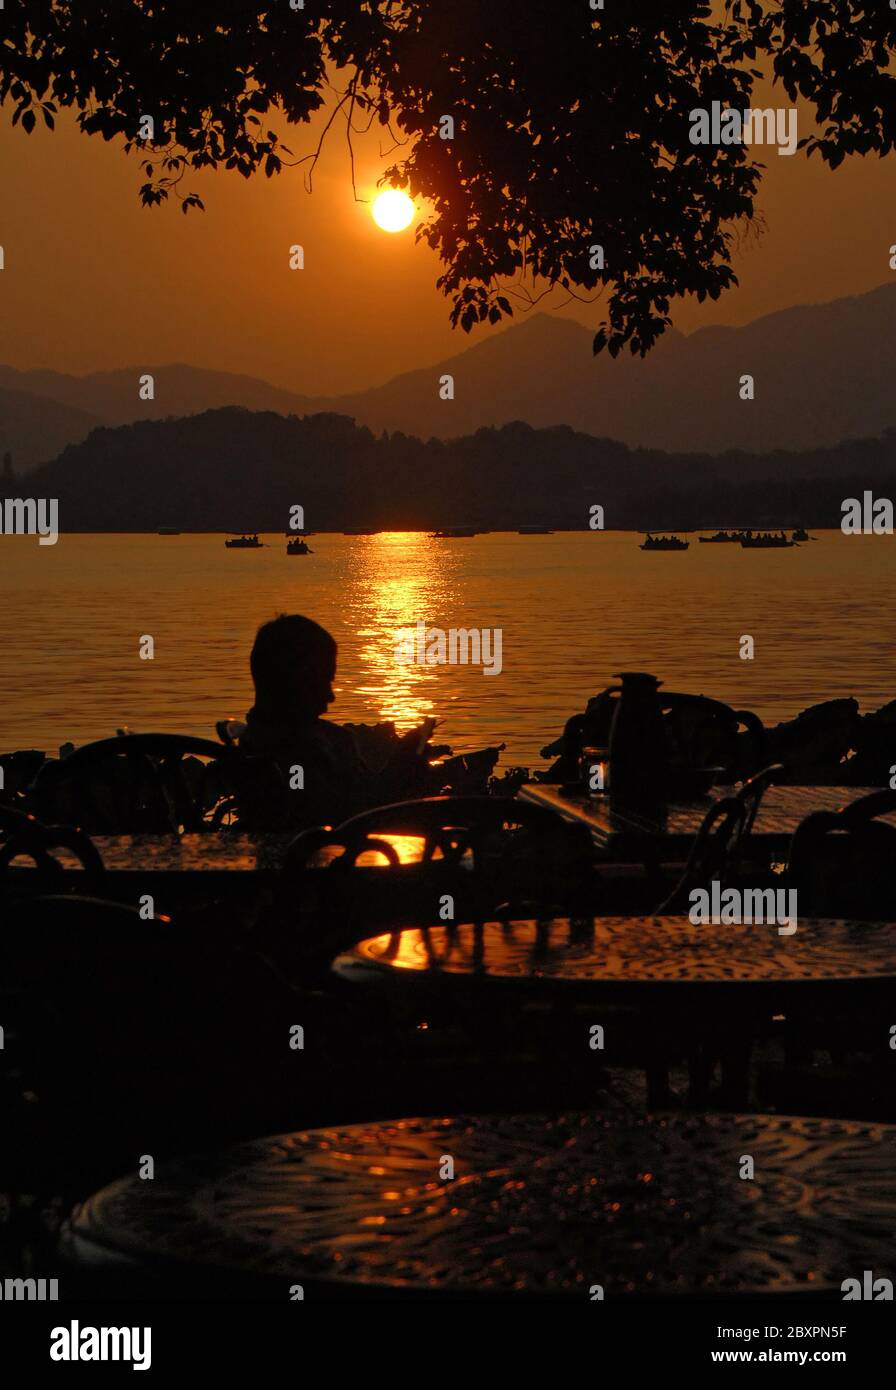 West Lake (Xi Hu) sunset in Hangzhou, Zhejiang Province, China. Sunset view of West Lake, Hangzhou with silhouette of a person sitting in a cafe. Stock Photo